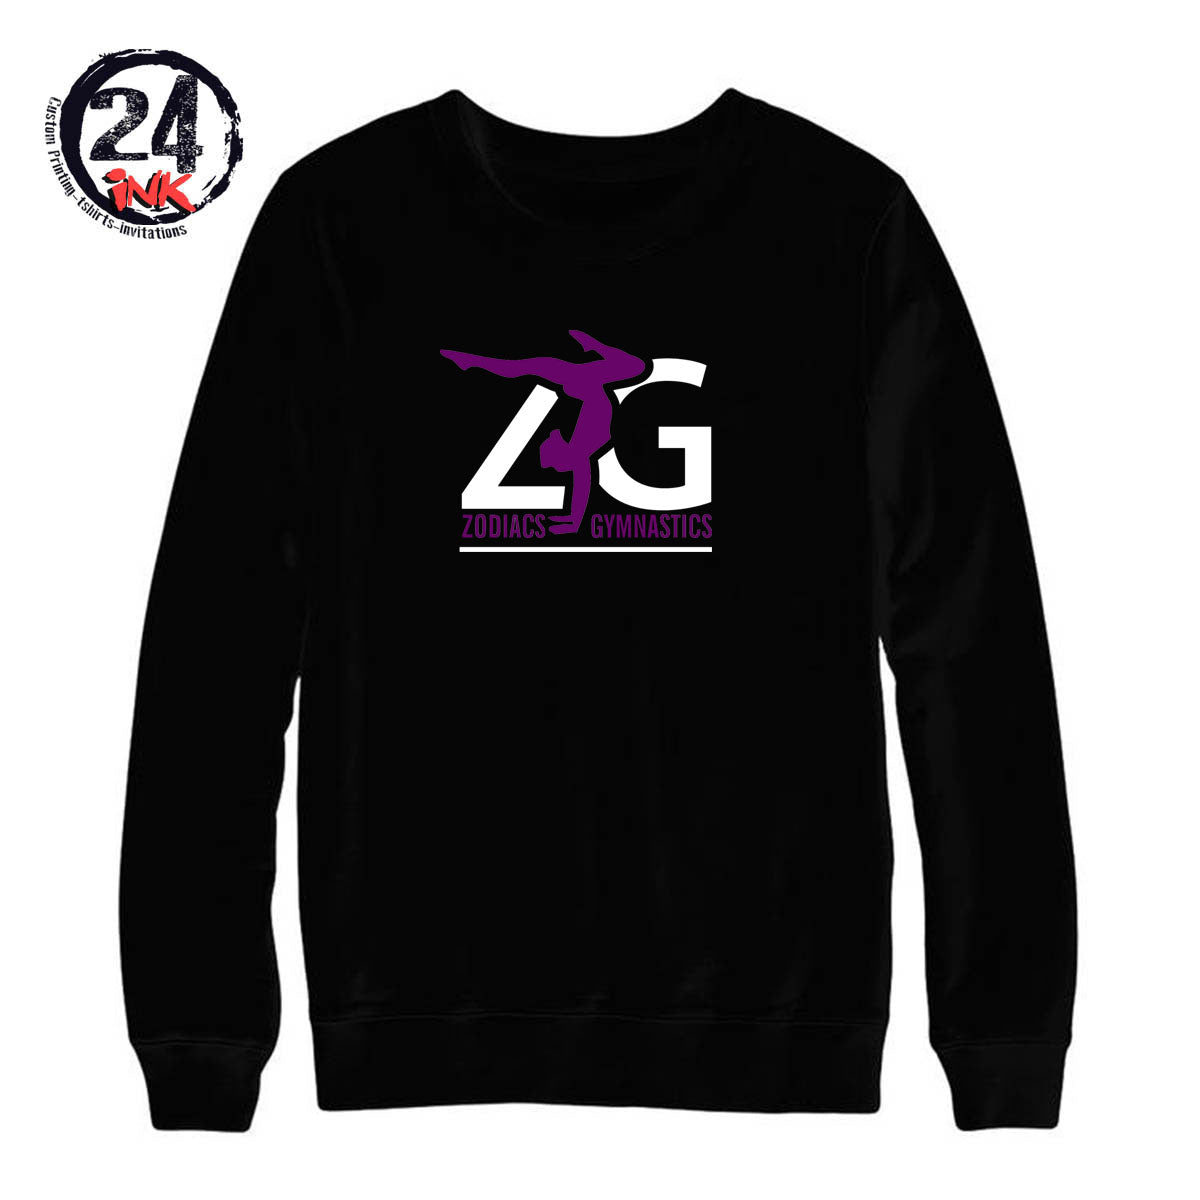 ZG Zodiacs non hooded sweatshirt